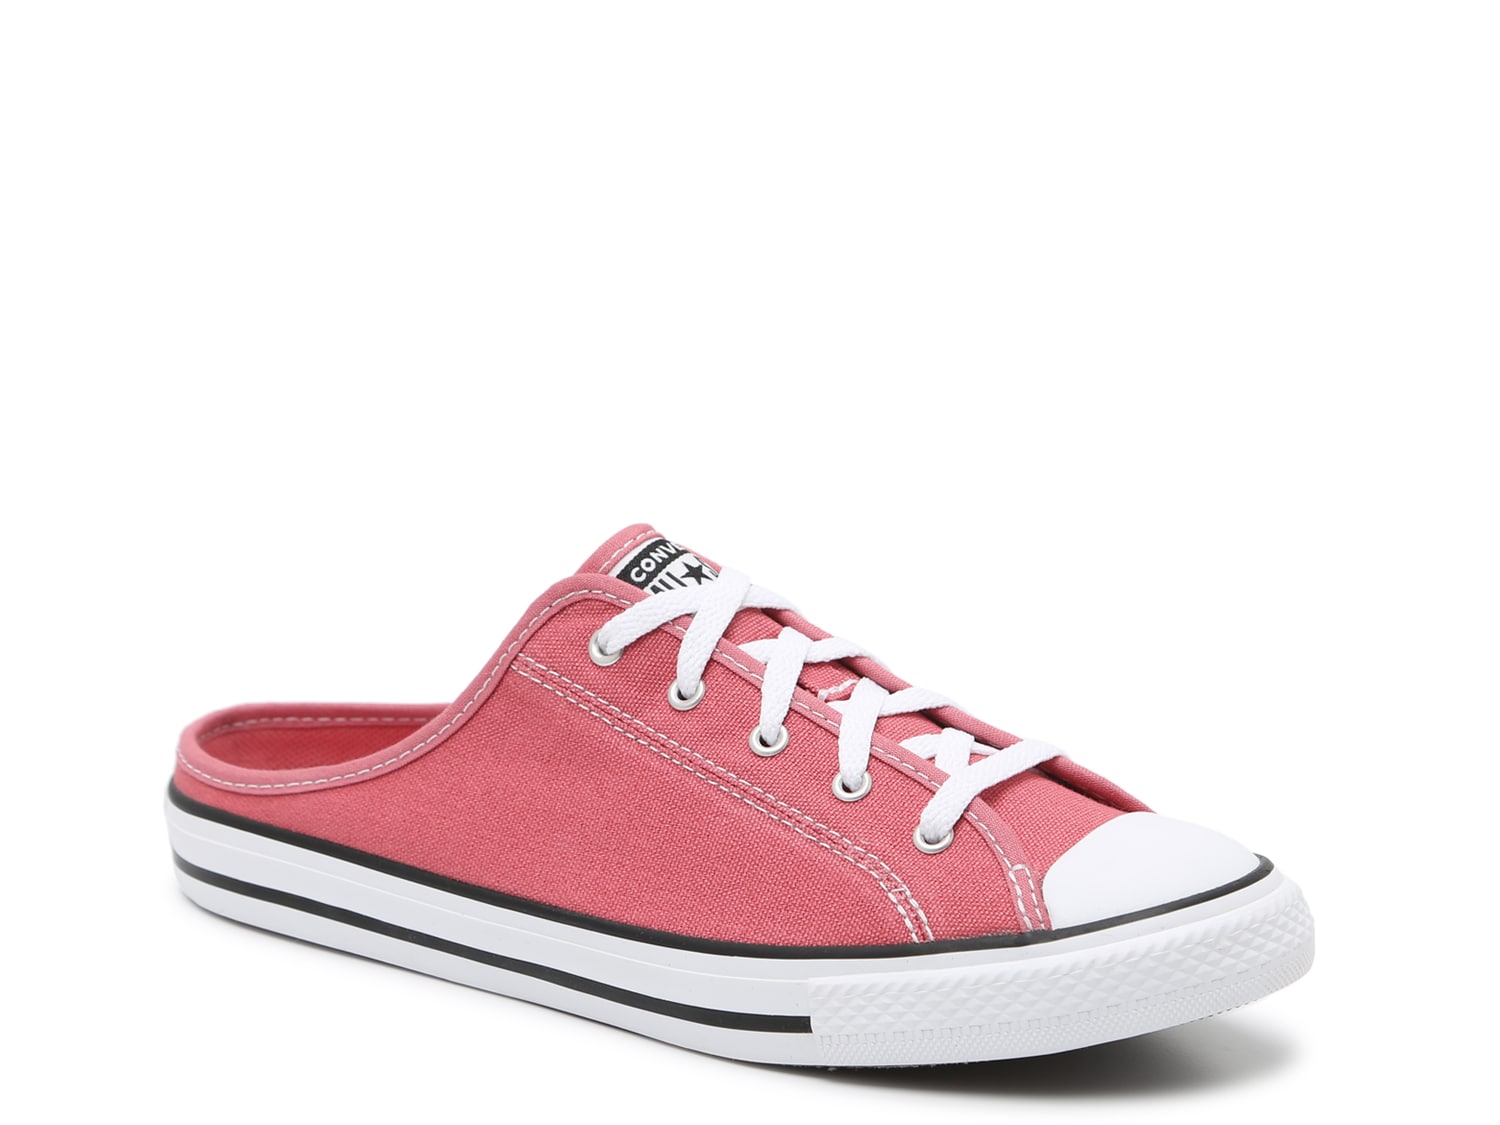 pink converse sandals